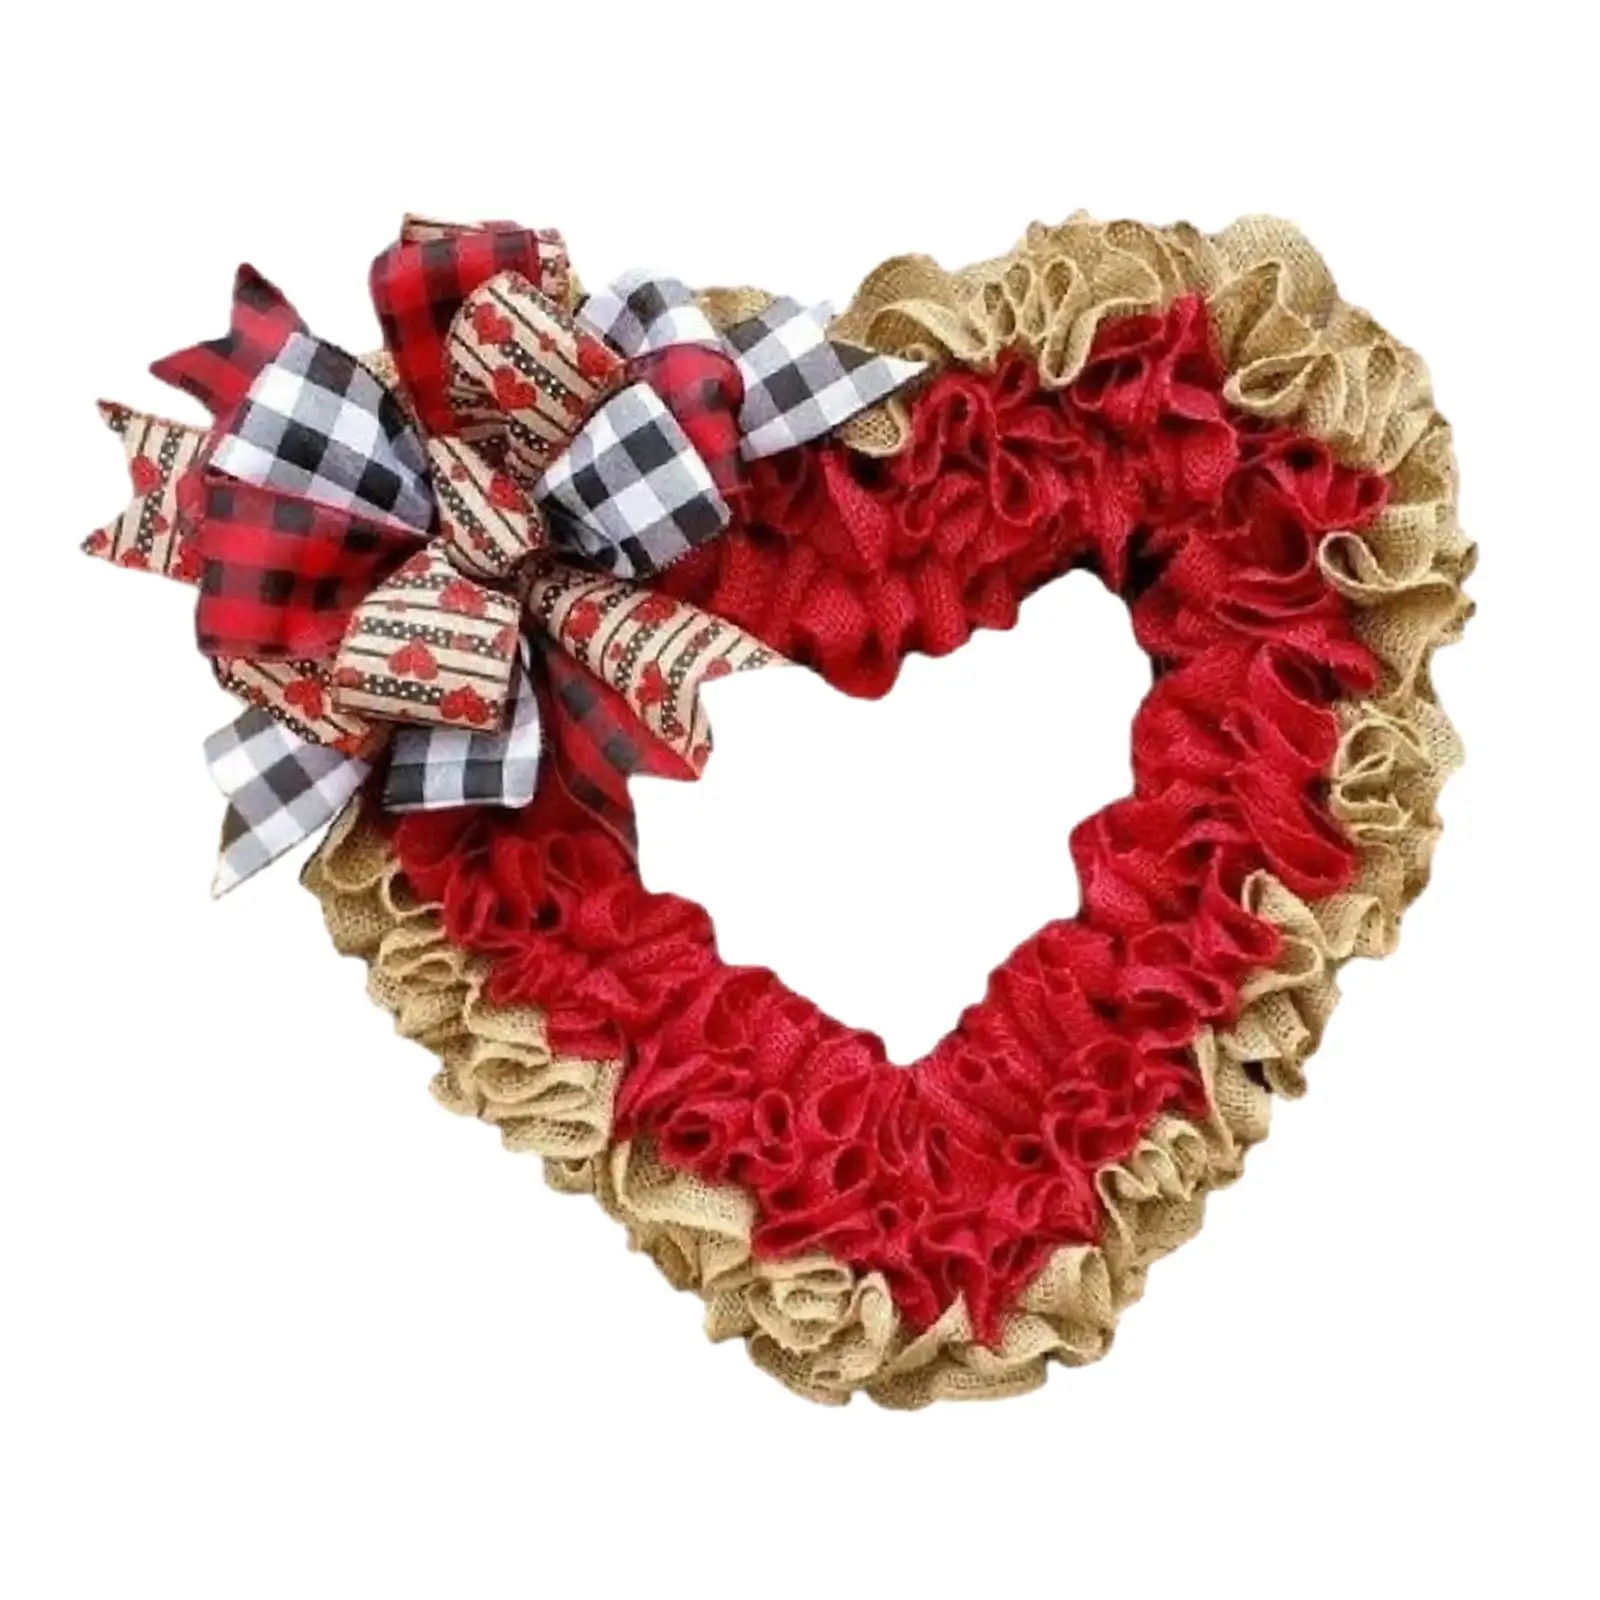 Heart Wreath Valentines Day Wreath for Front Door,Valentines Day Indoor Outdoor Wall Hanging Party Artificial Wreath Garland